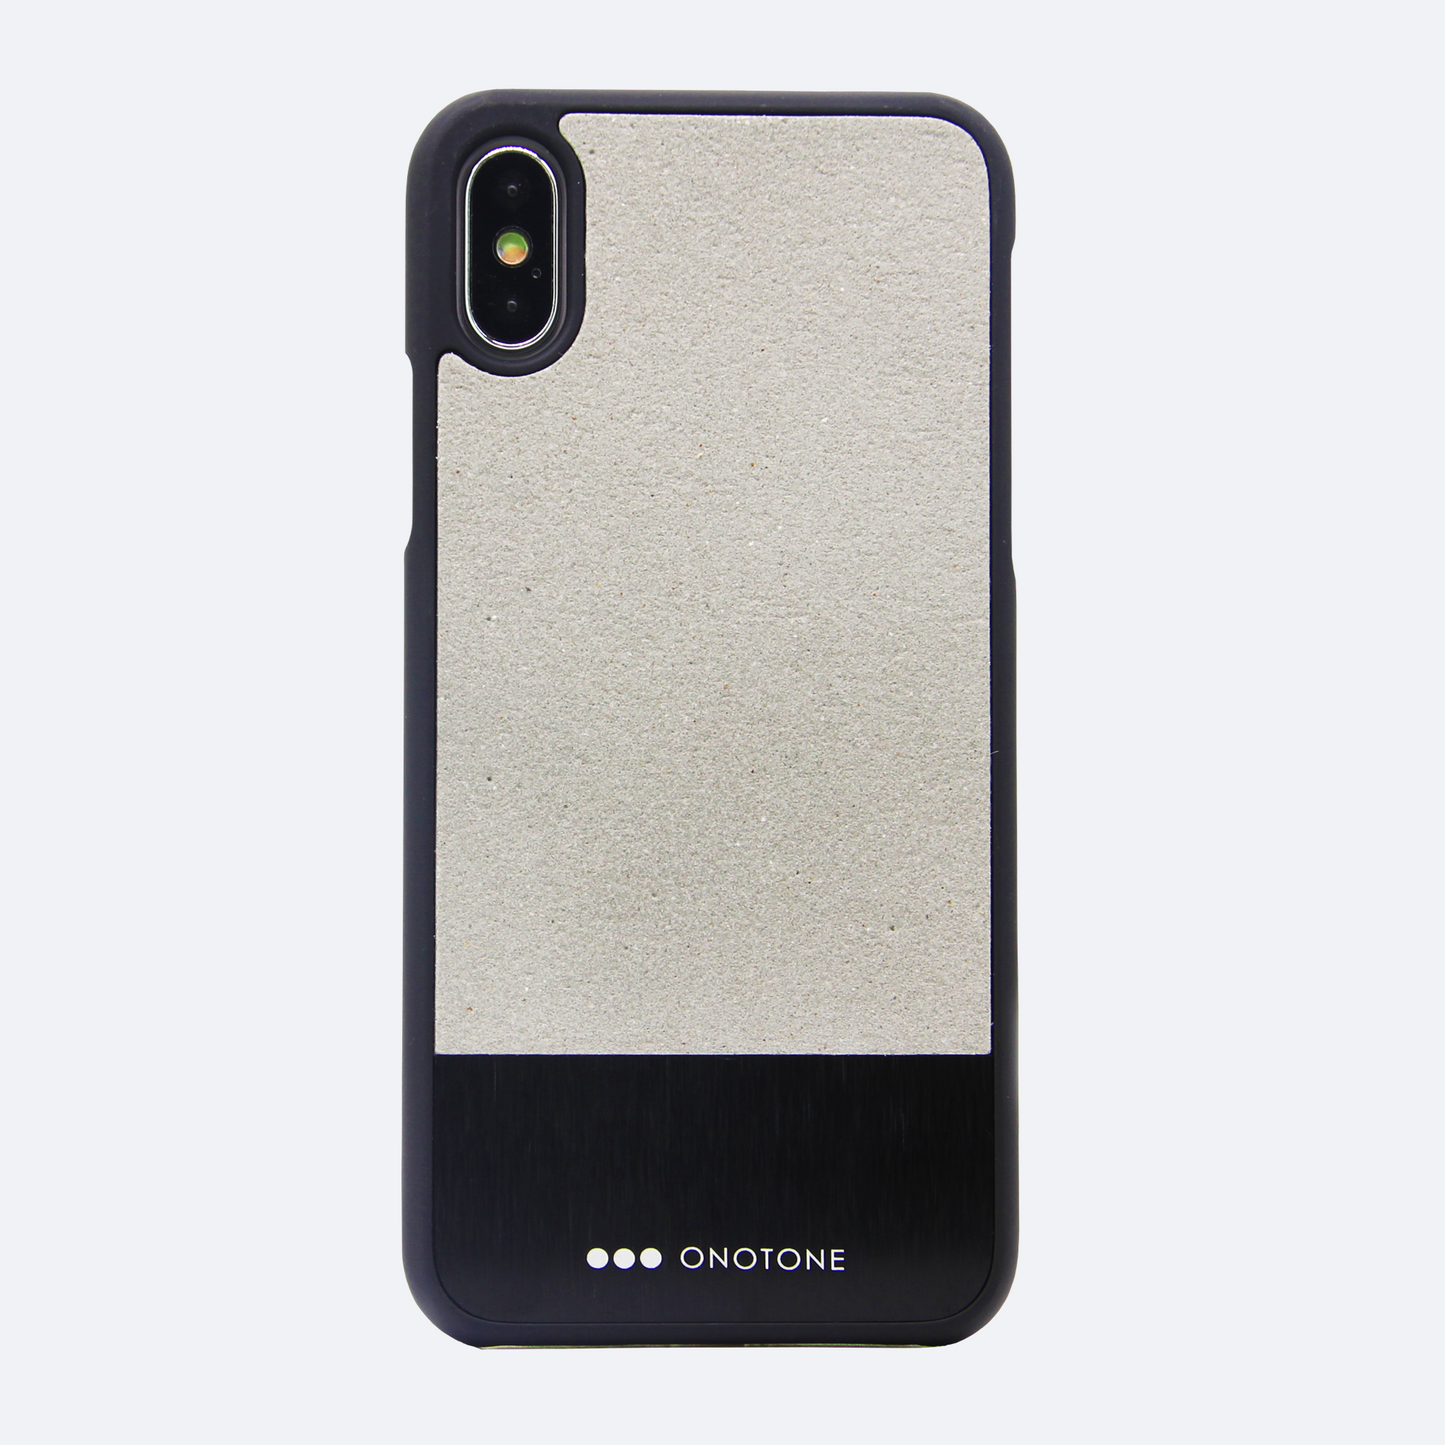 Minimalist iPhone cases